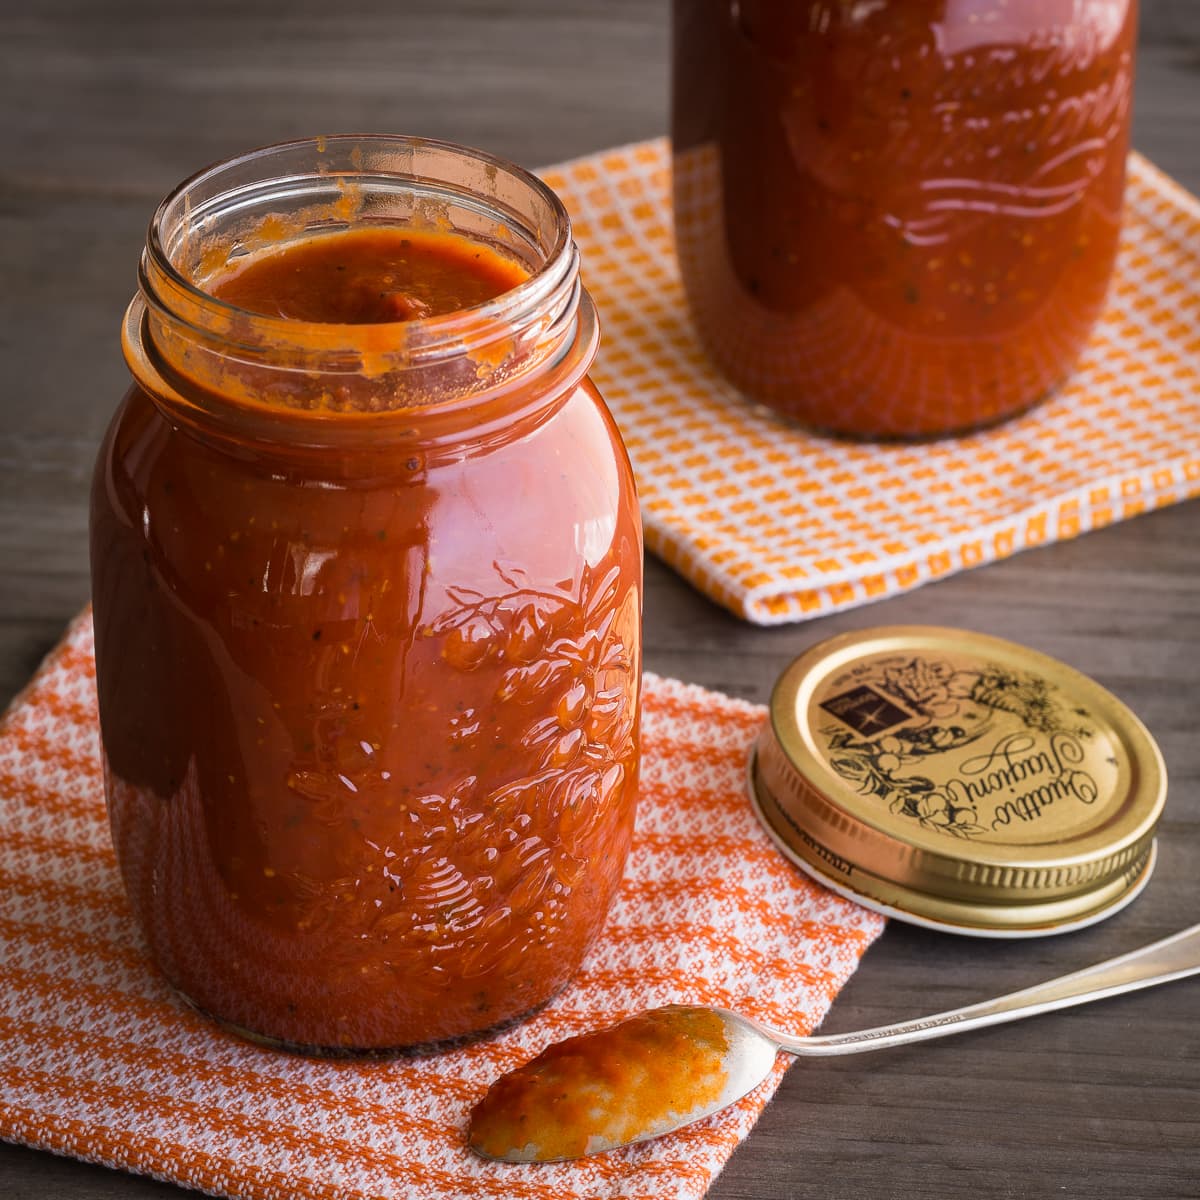 30 minute pasta sauce in jars